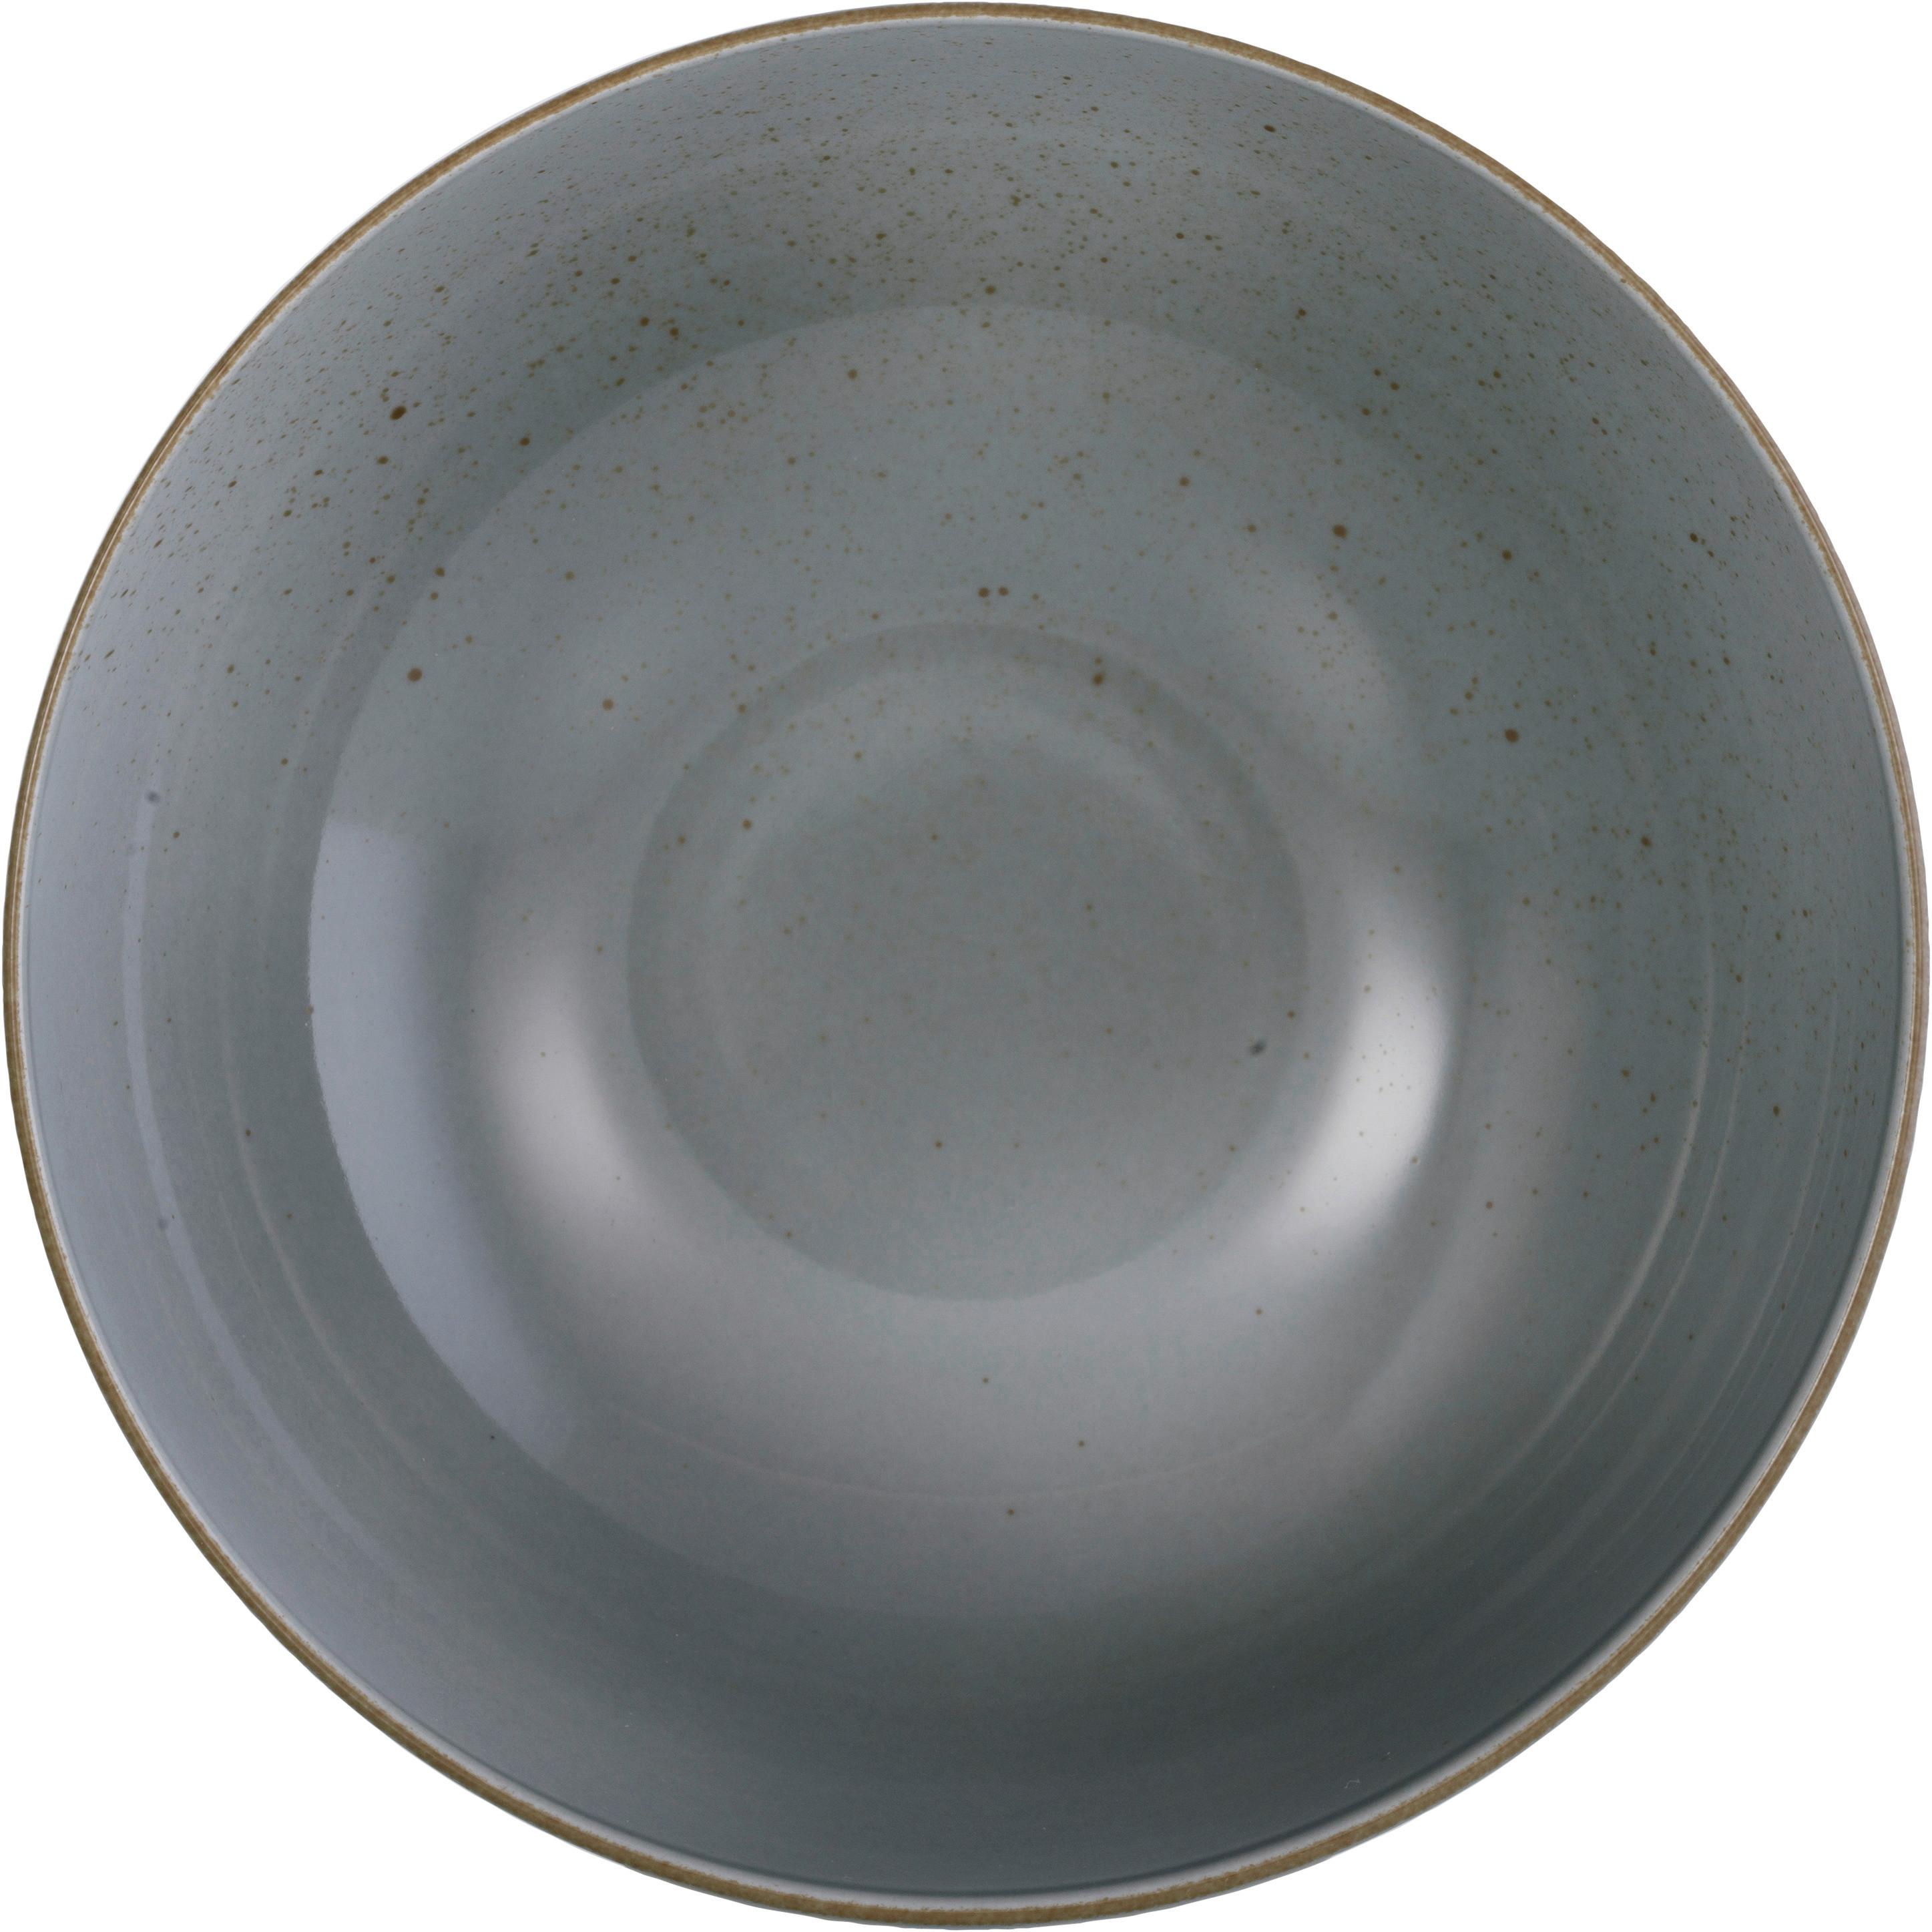 Salátová Mísa Capri, Ø: 25cm - šedá, Moderní, keramika (25/25/8cm) - Premium Living